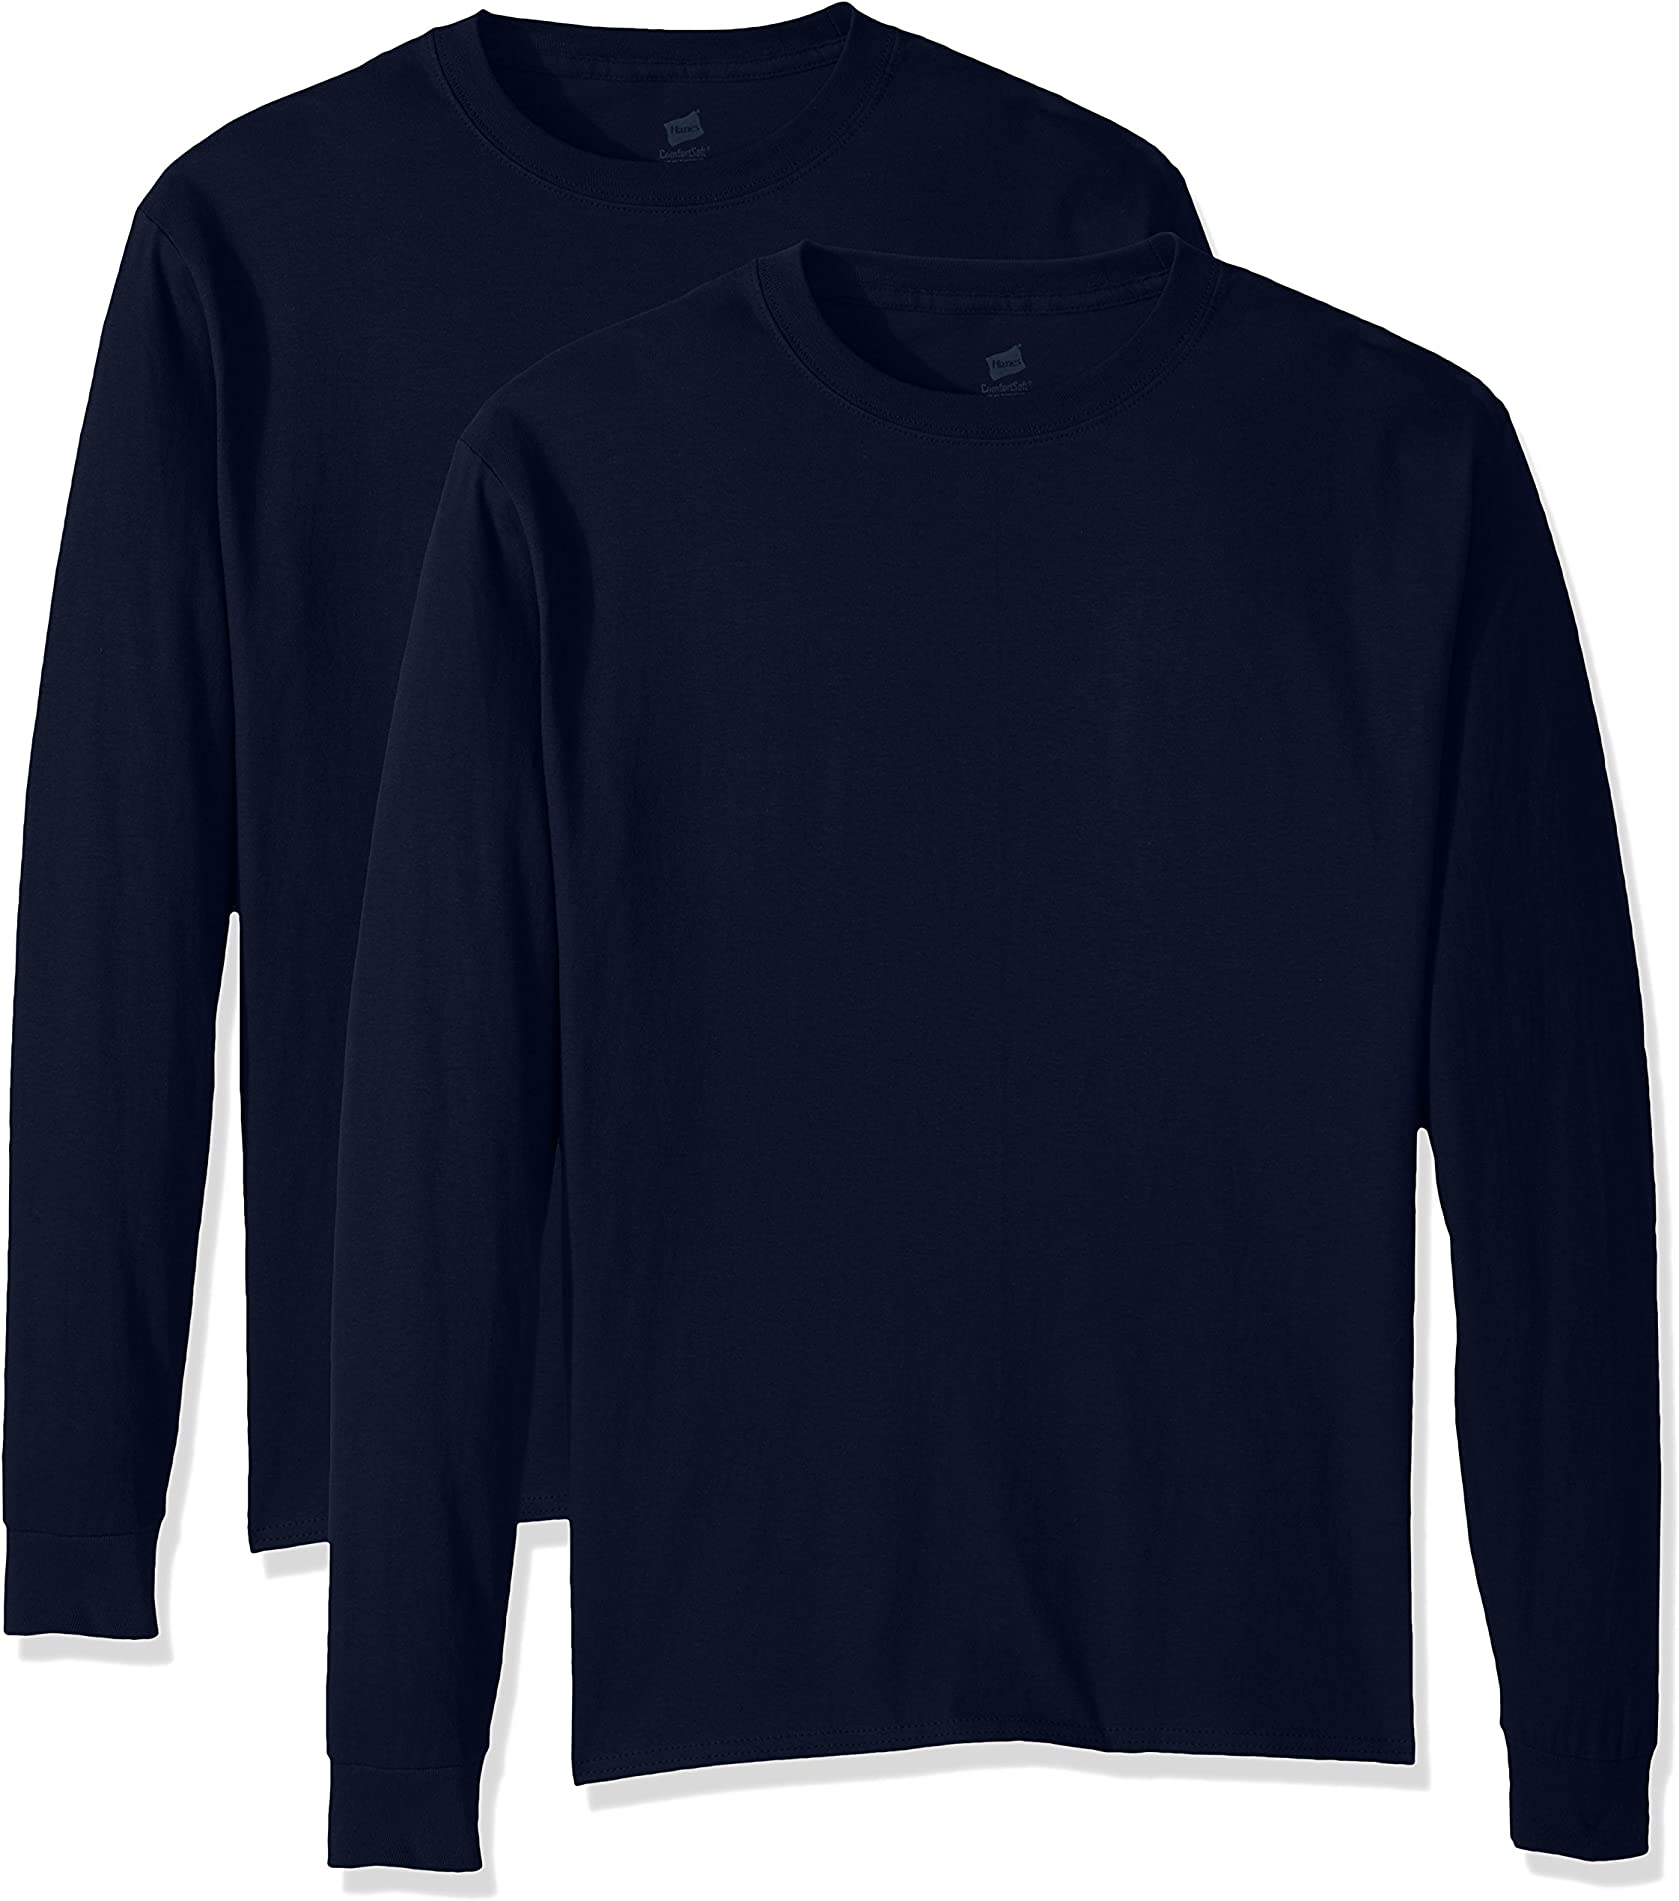 Hanes Essentials Mens Long-Sleeve T-Shirt 2-Pack